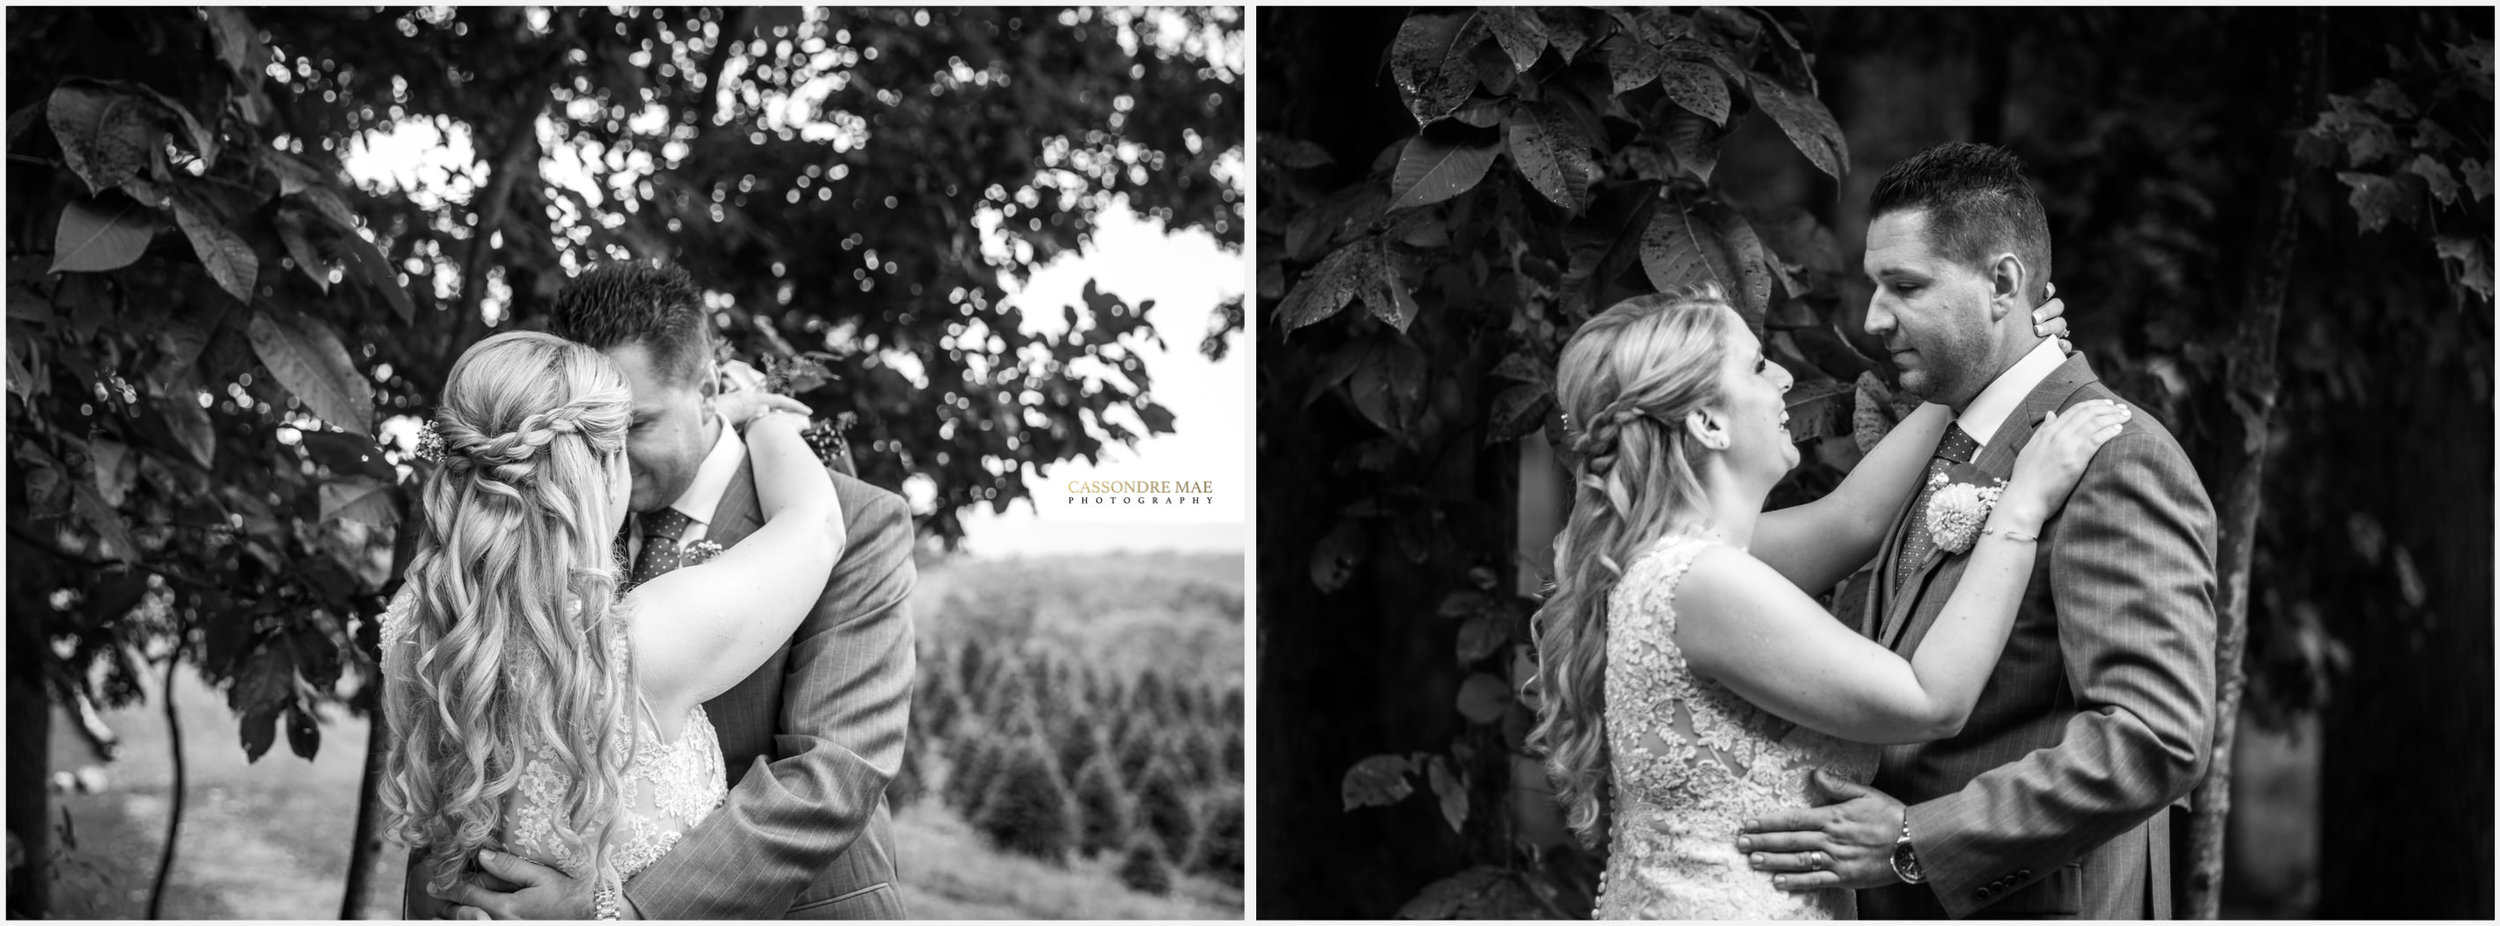 Cassondre Mae Photography Emmerich Tree Farm Wedding 21.jpg